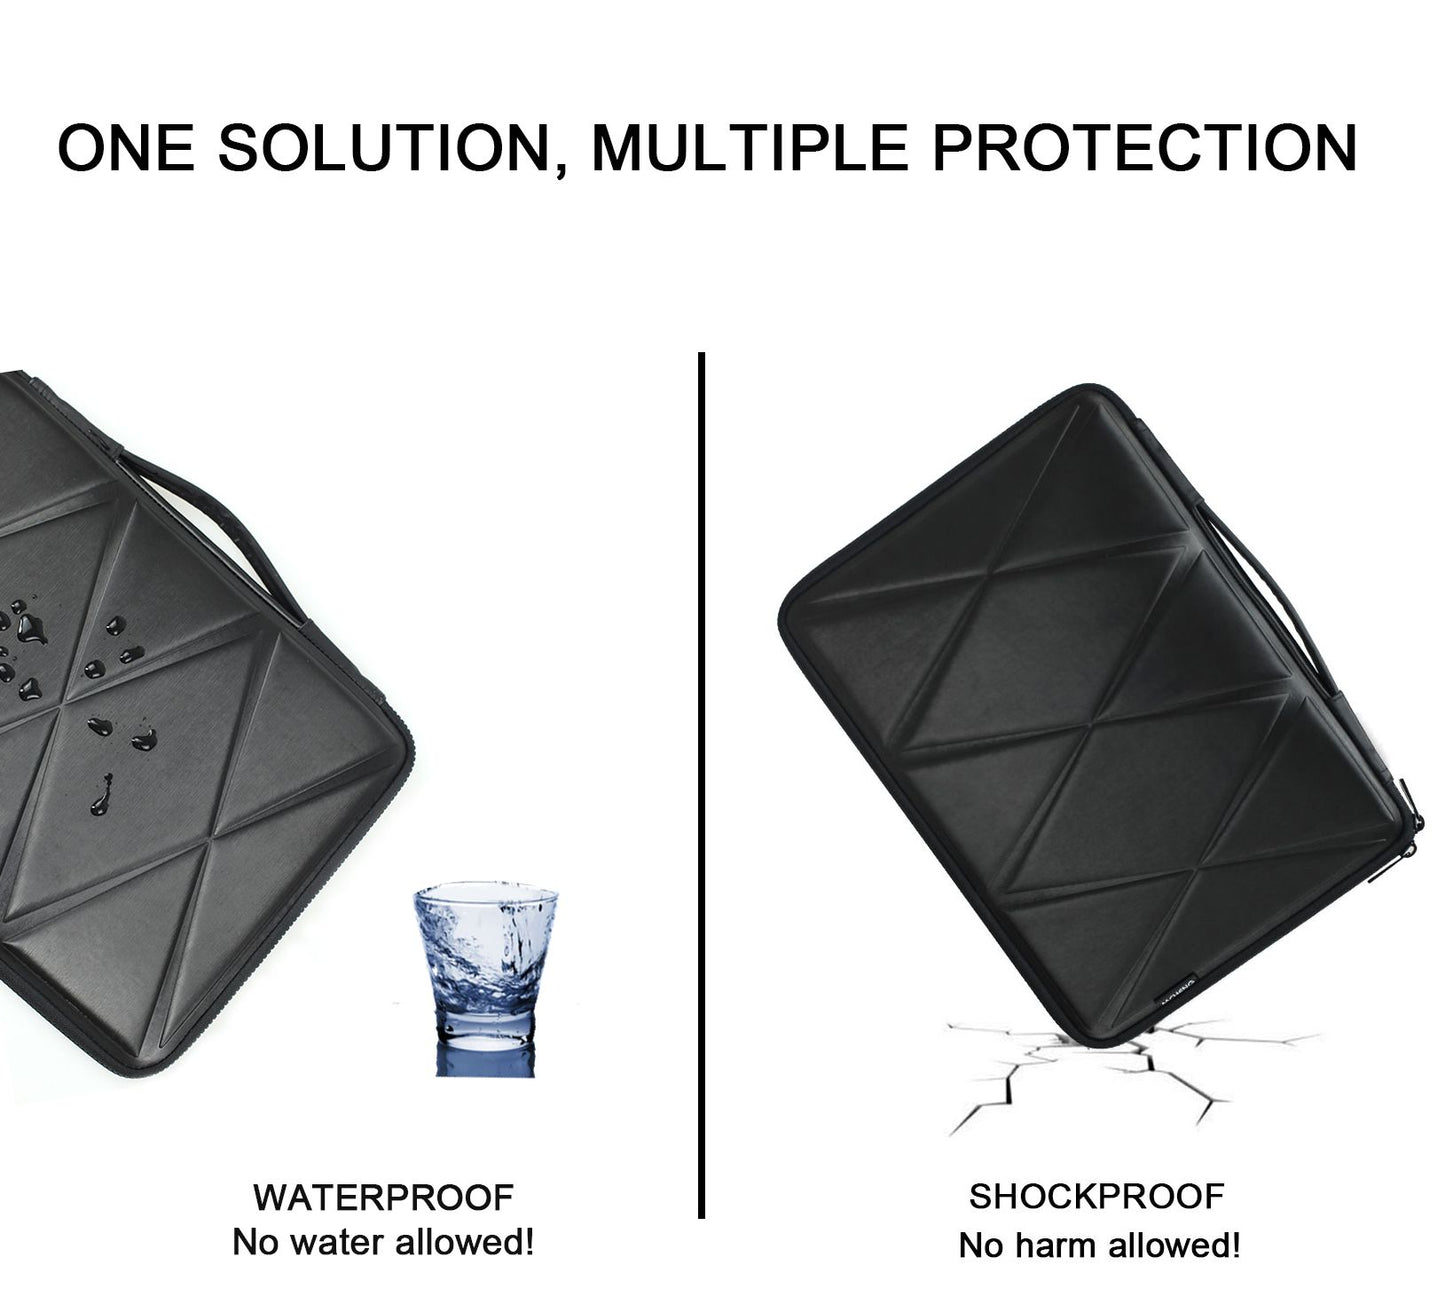 MCHENG10&quot;,13&quot;,14&quot;,156&quot;Inch Laptop Handbag Sleeve Lightweight Business Briefcase Water Resistant Office Messenger Bag With Handle